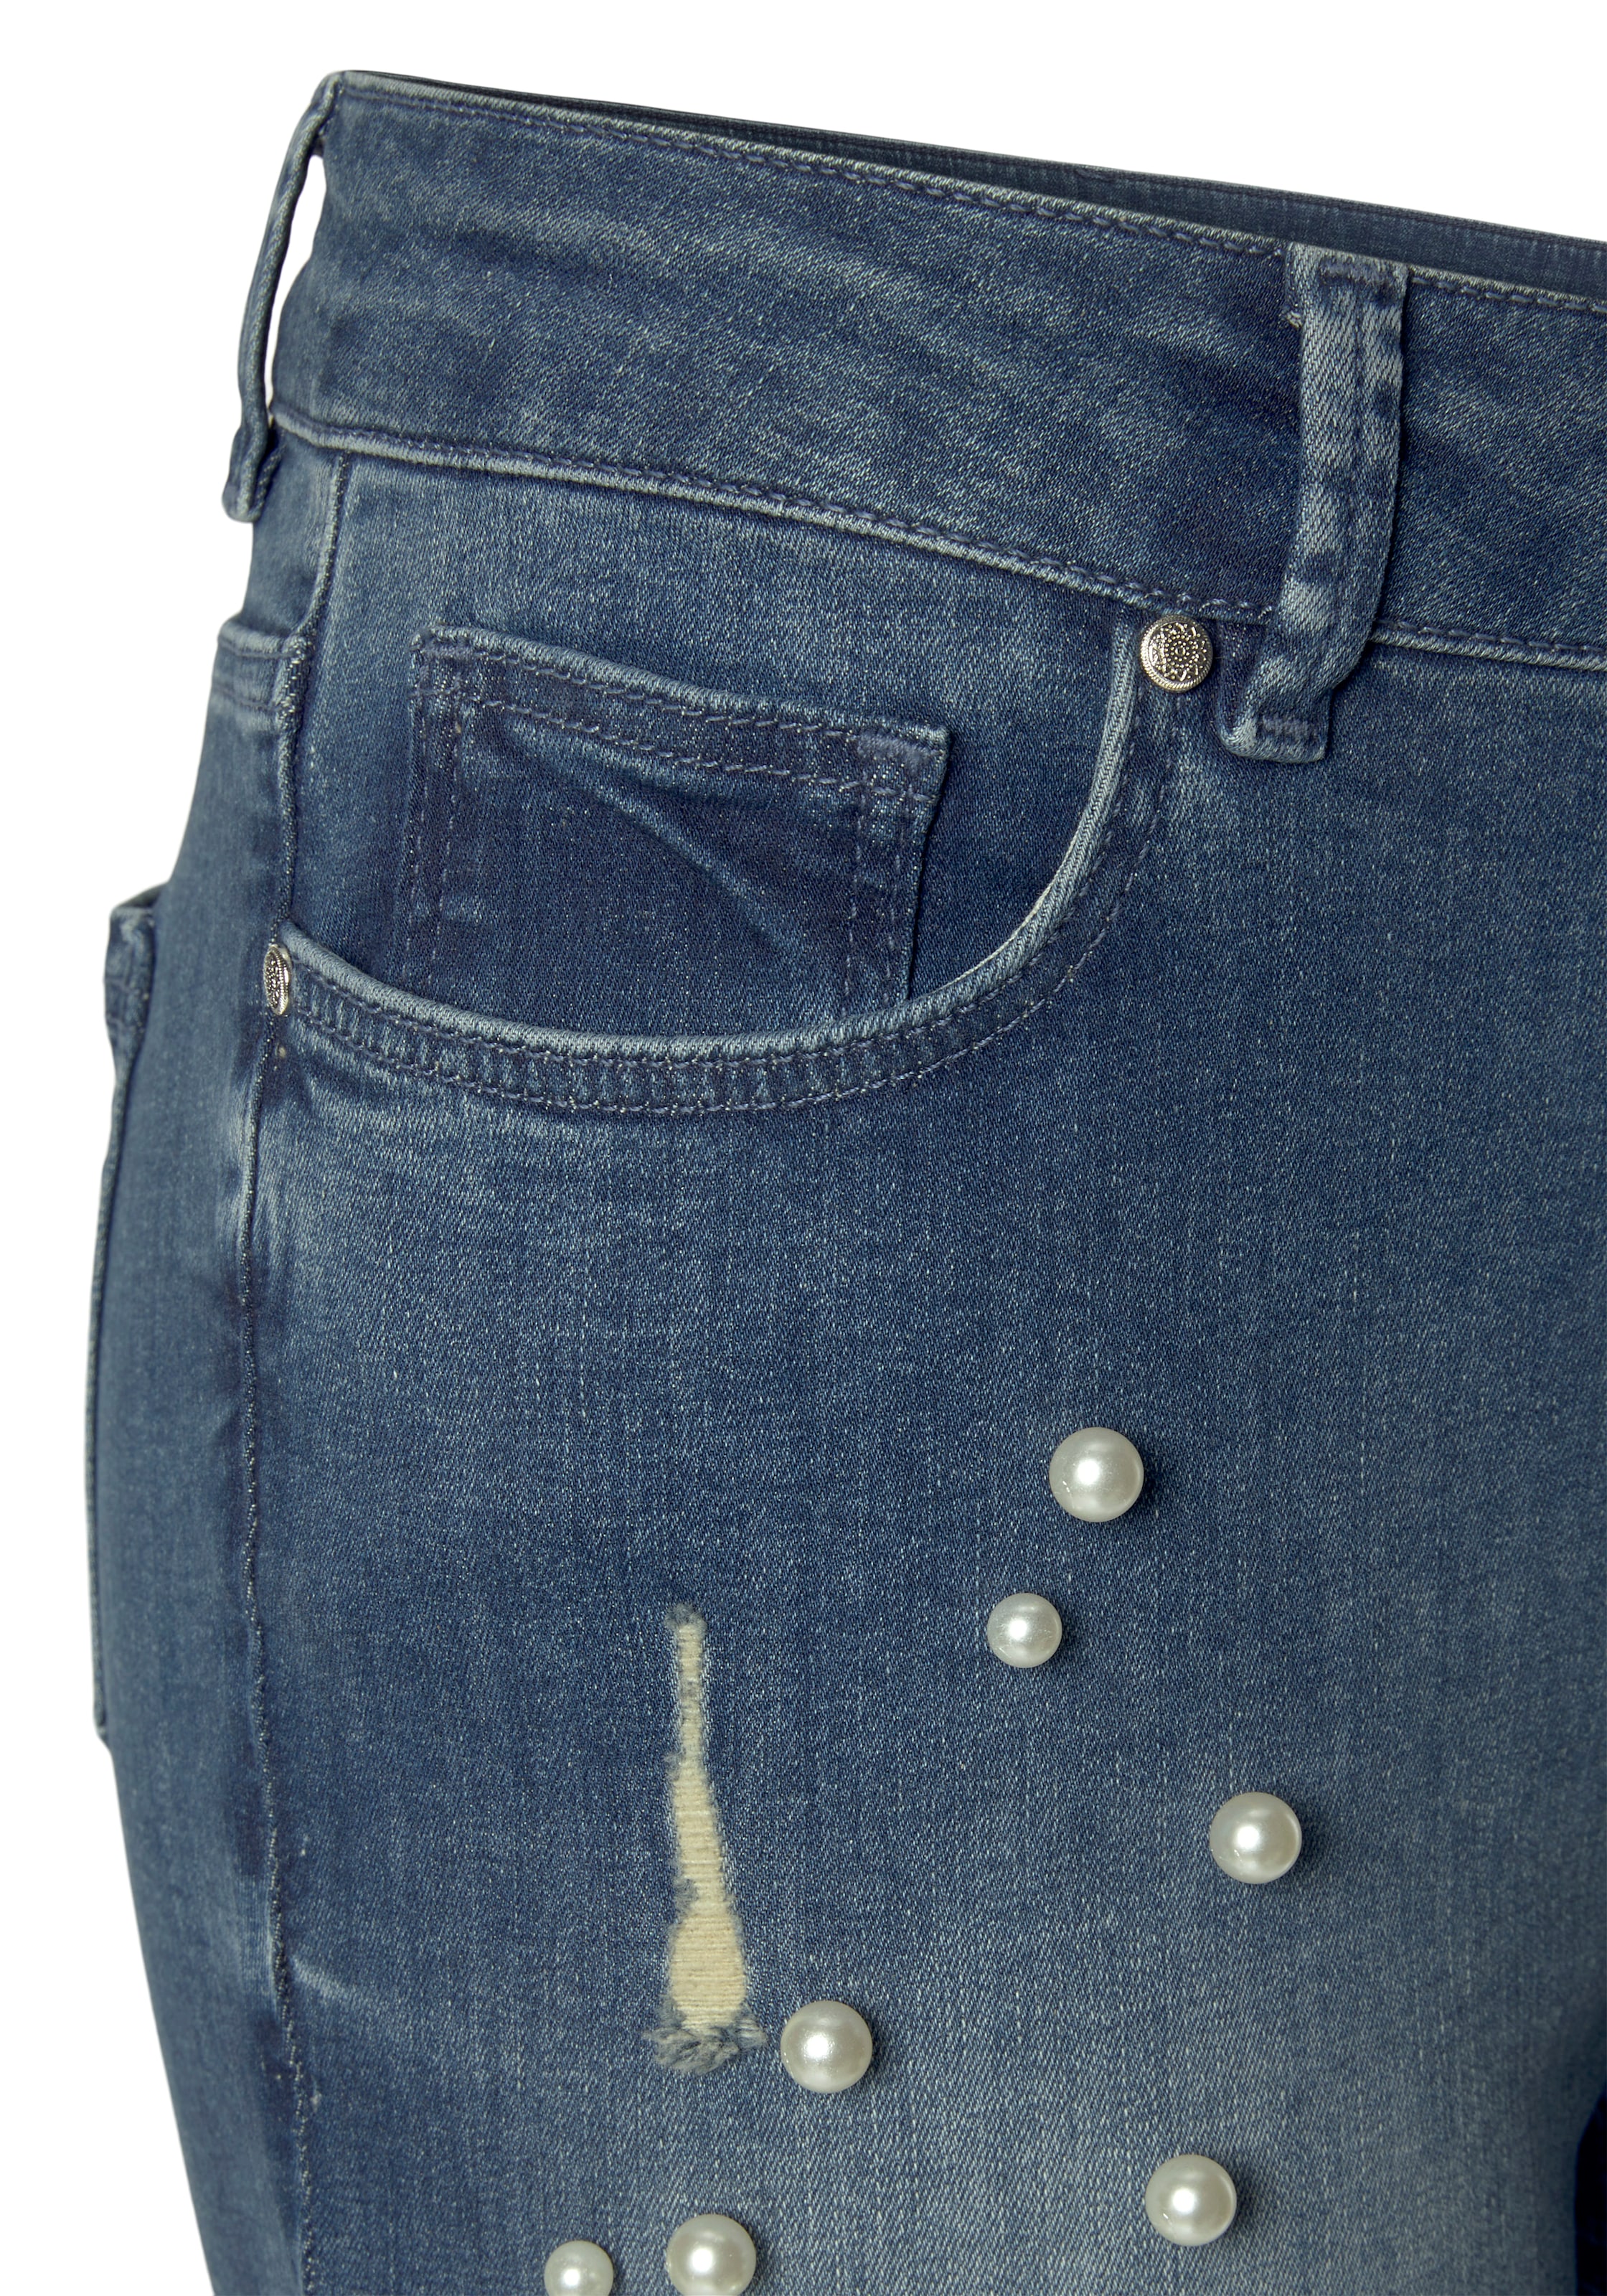 LASCANA Destroyed-Jeans, mit Perlen, elastische Skinny-Jeans